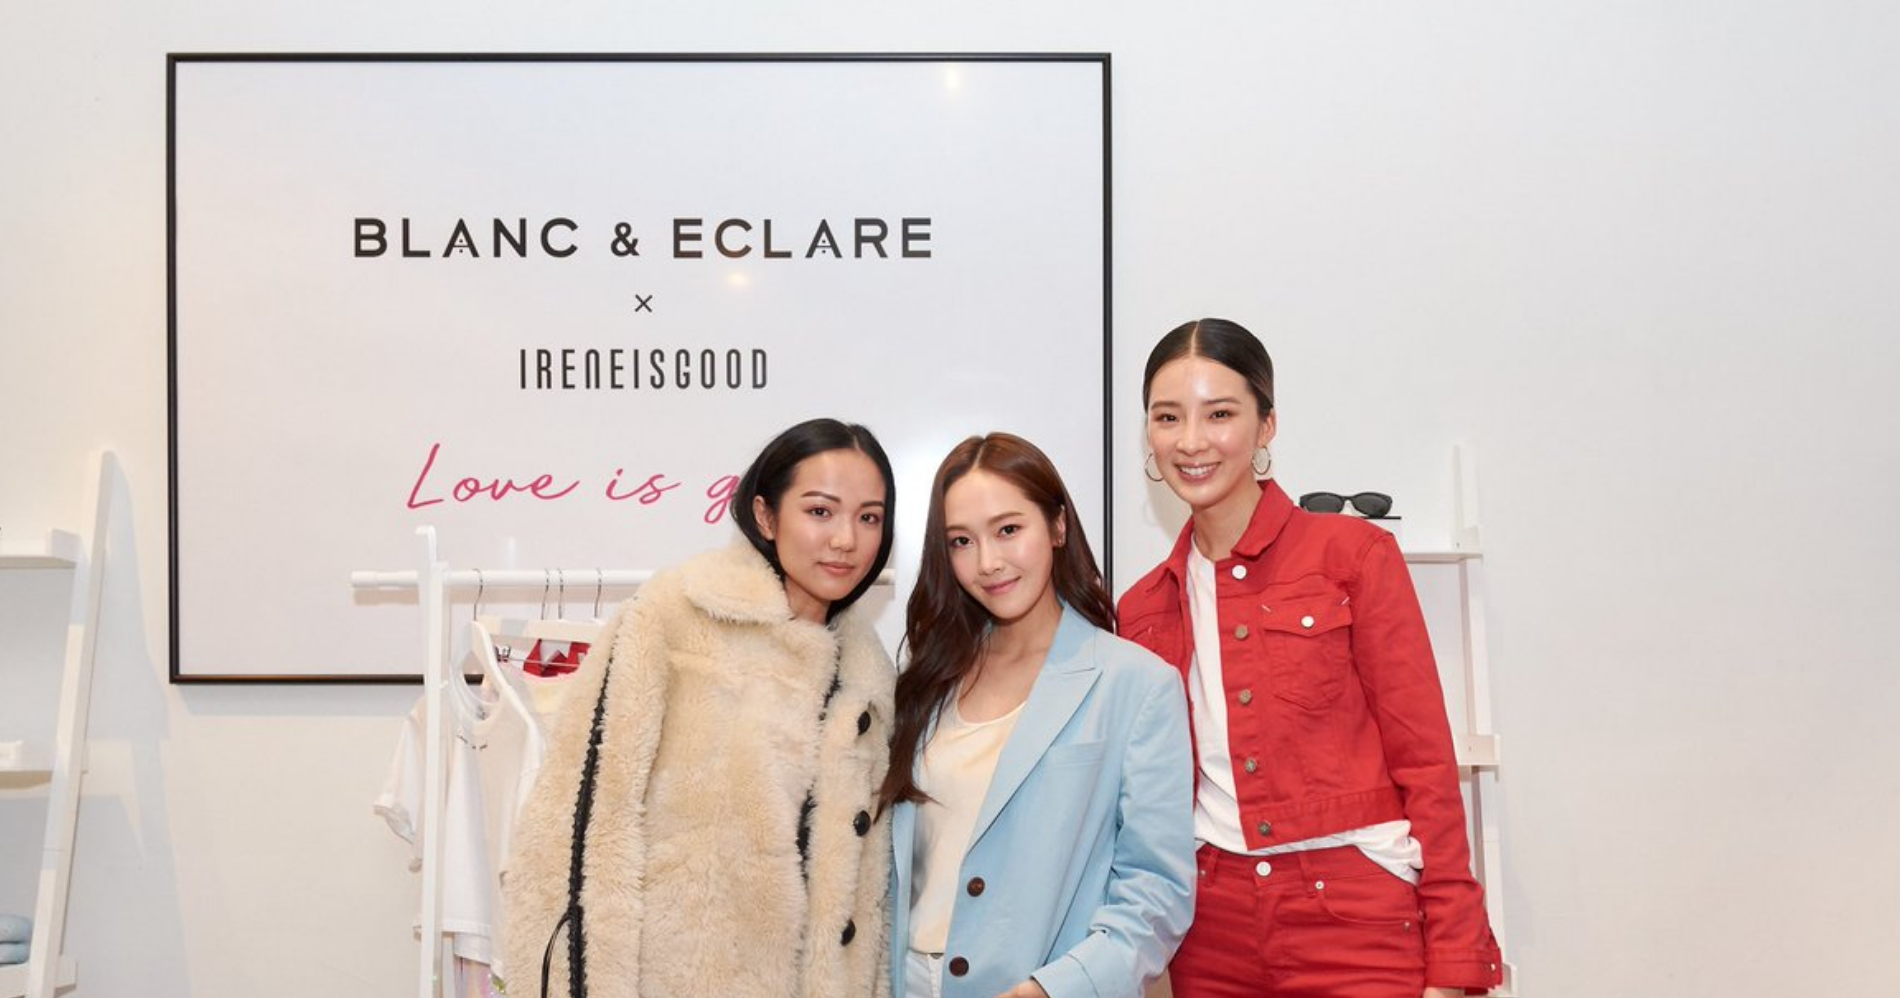 Yoyo Cao dan Irene is Good di acara BLANC & ECLARE x Keds yang dihosting oleh Jessica Jung (Sumber gambar: Twitter @BLANC_ECLARE)